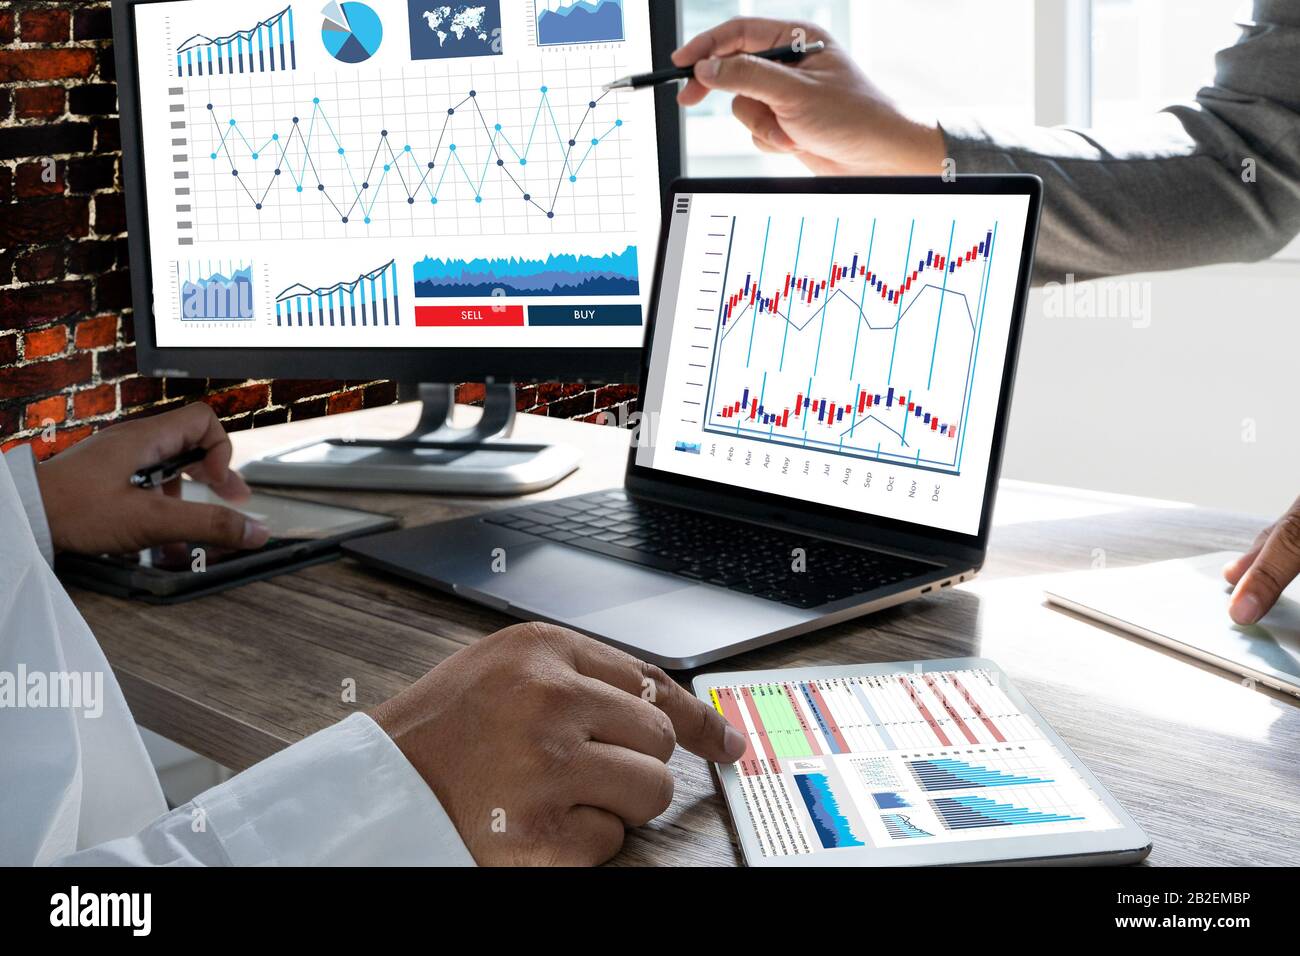 work hard Data Analytics Statistics Information Business Technology Stock Photo